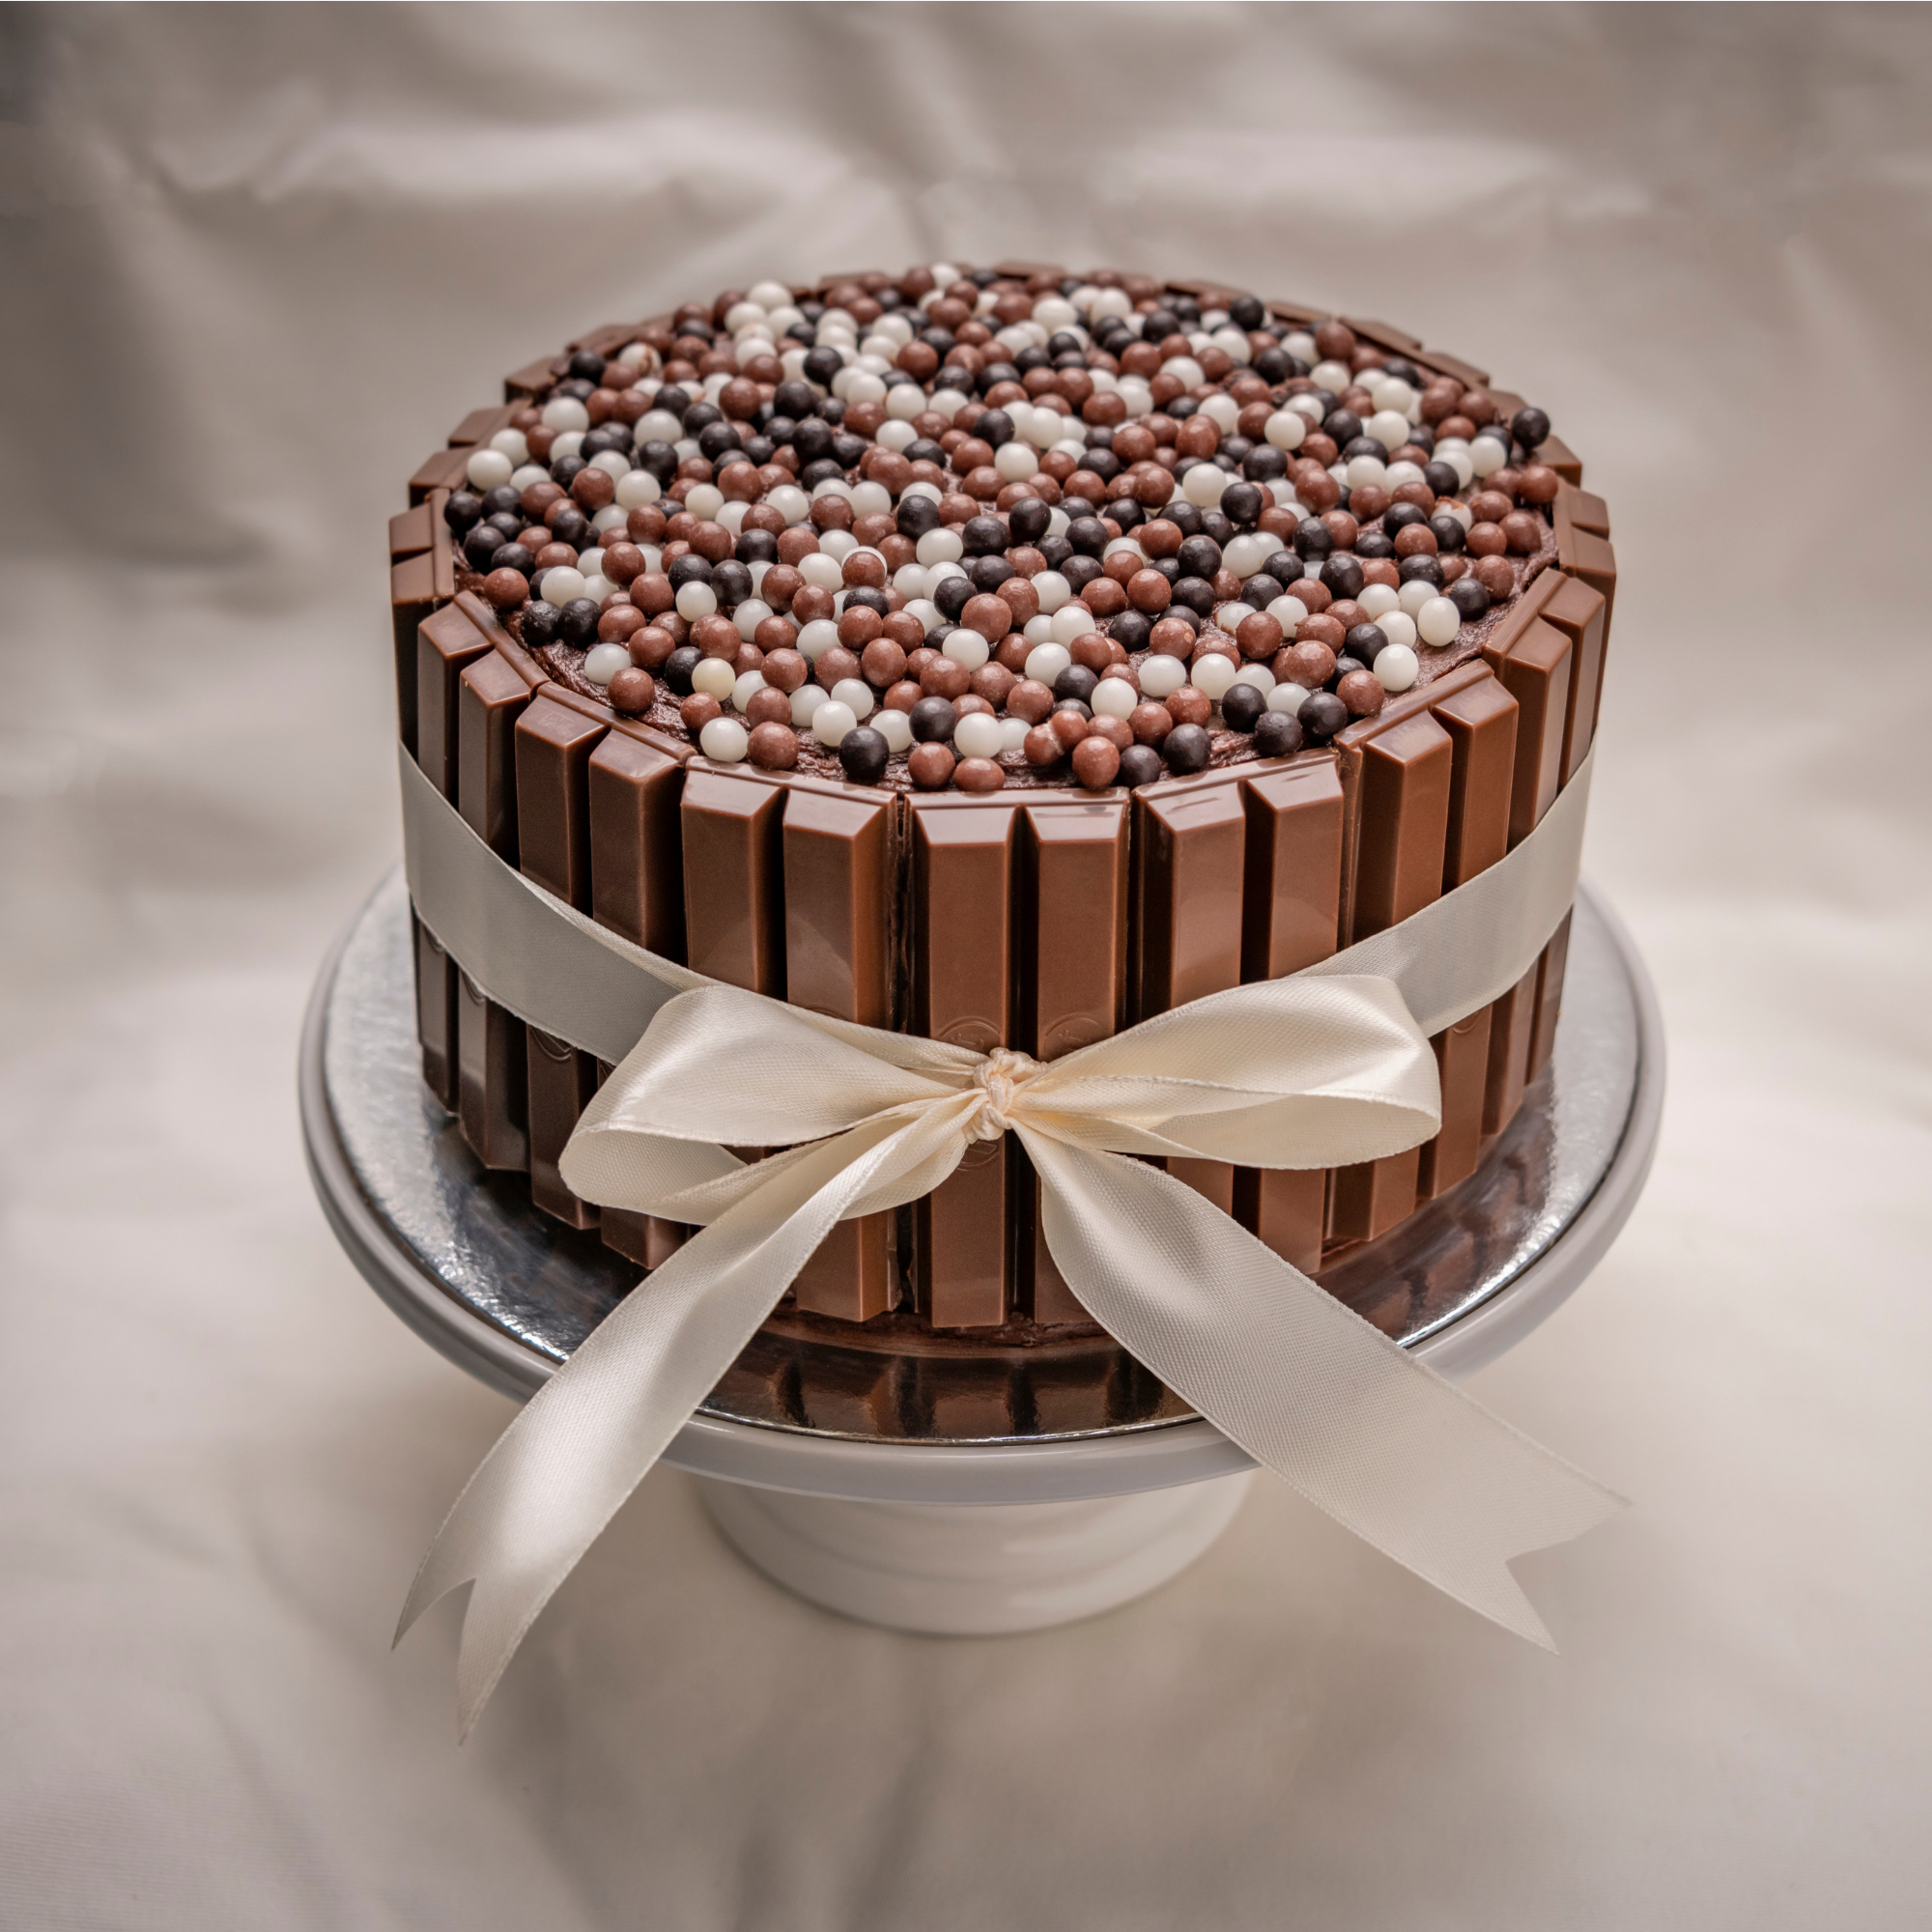 Kitkat Oreo Birthday Cake Delivery Online | Send Birthday Cake Online |  Order Birthday Cake Online